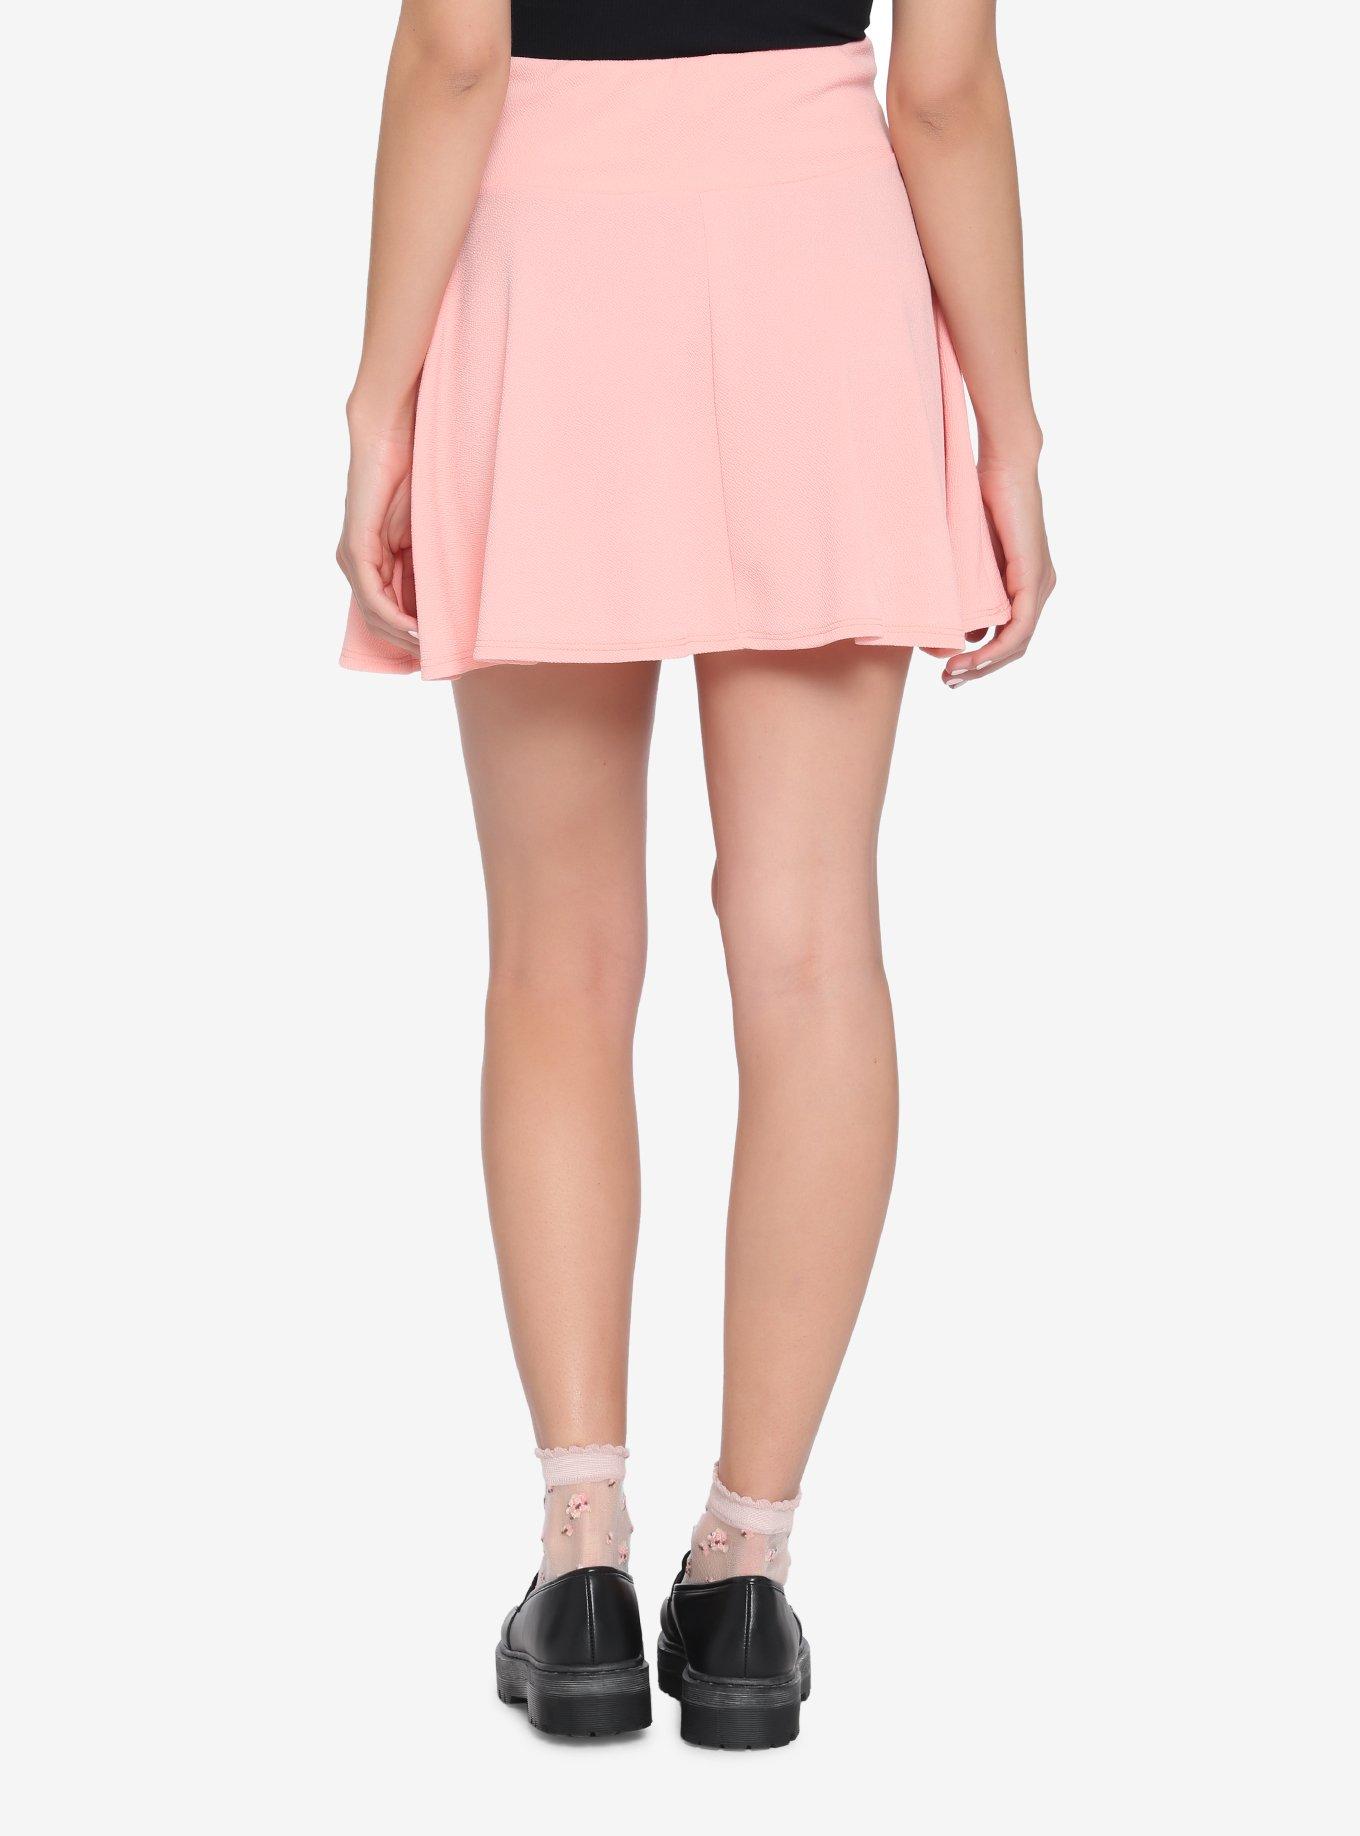 Pastel Pink Lace-Up Skater Skirt, PINK, alternate